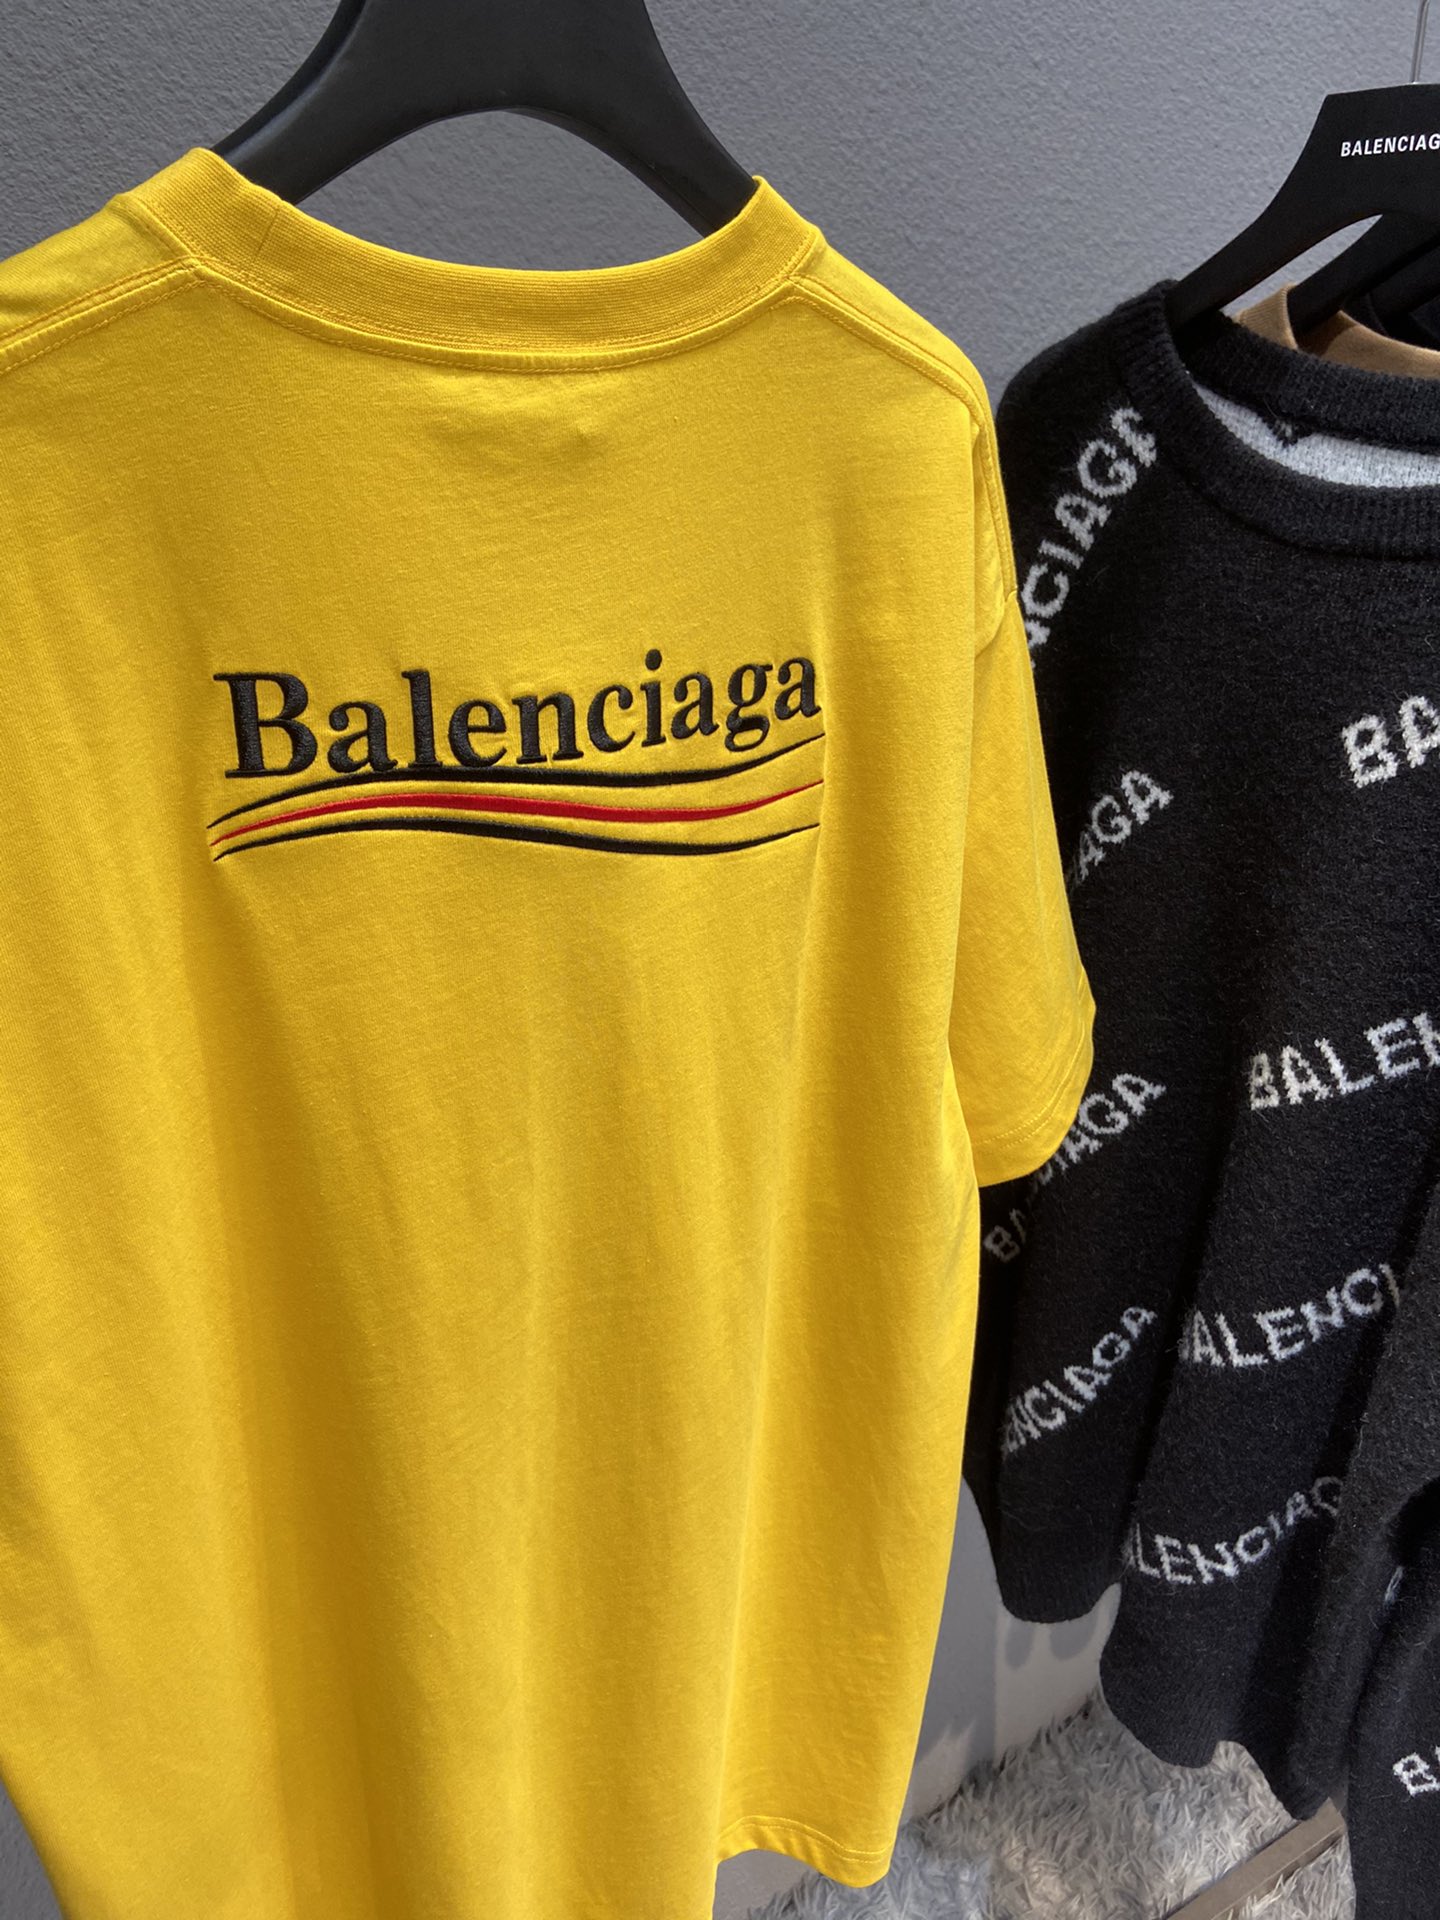 Balenciaga T-Shirt Political Campaign Large Fit 